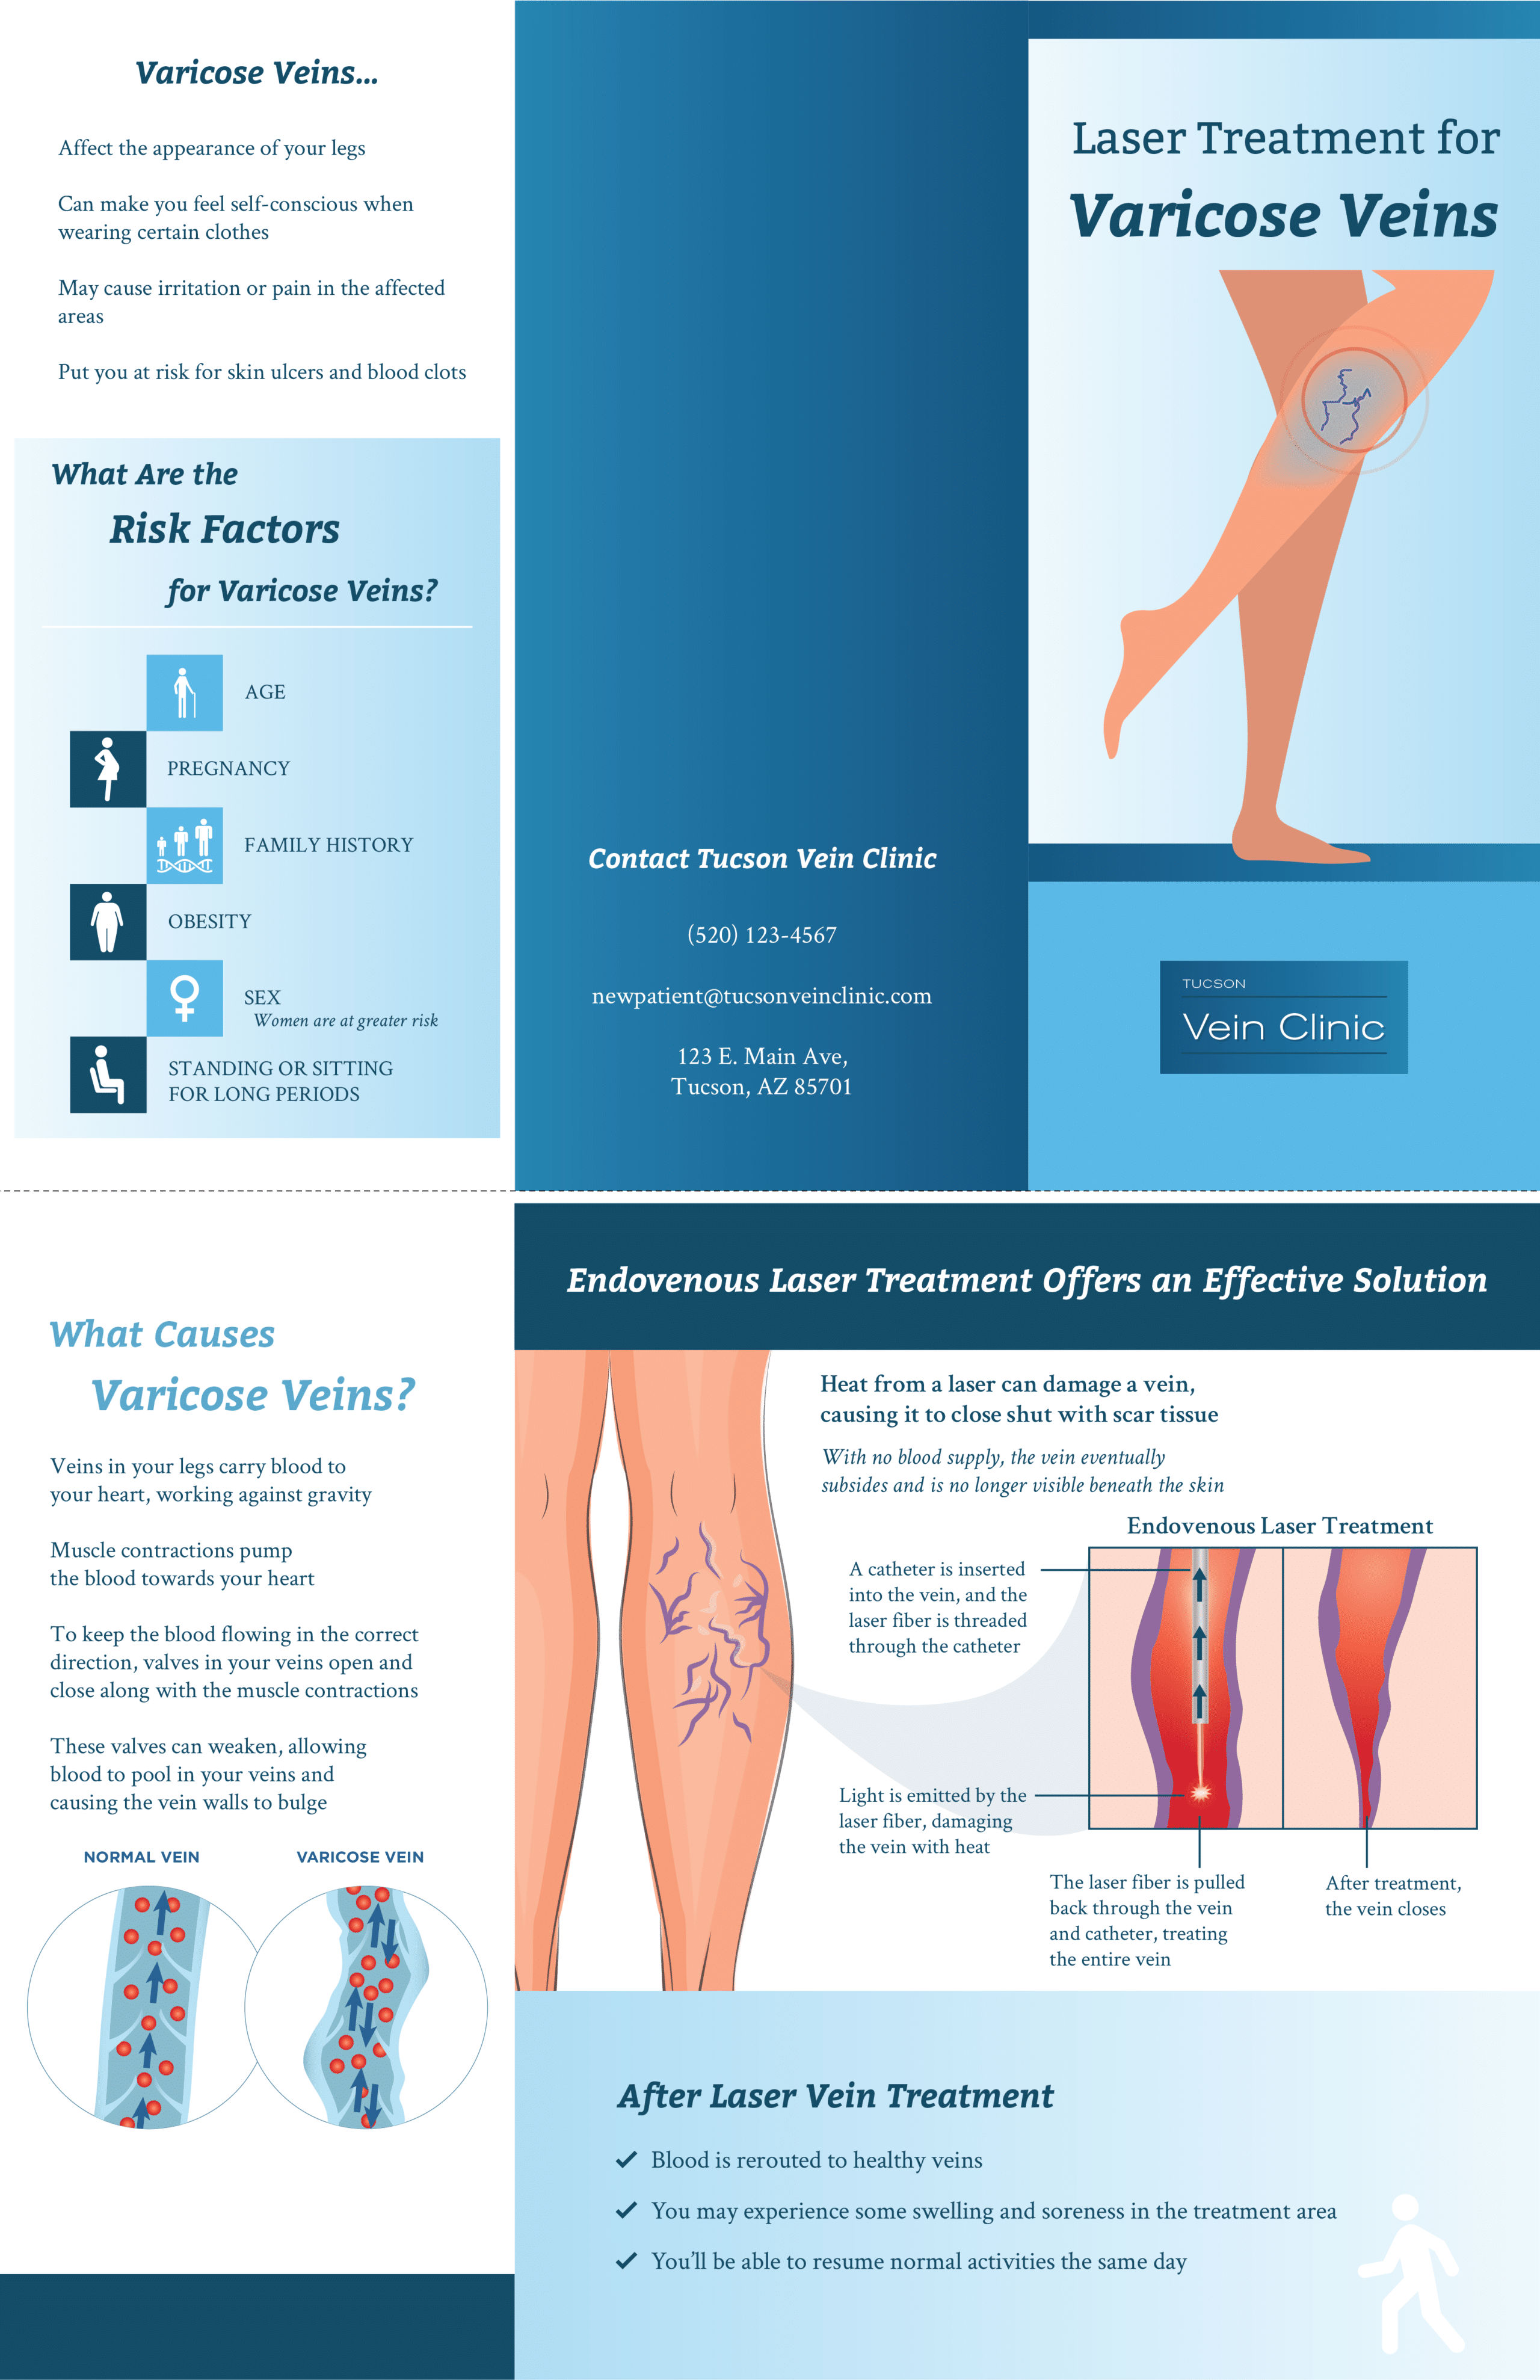 Brochure explaining laser treatment for varicose veins.